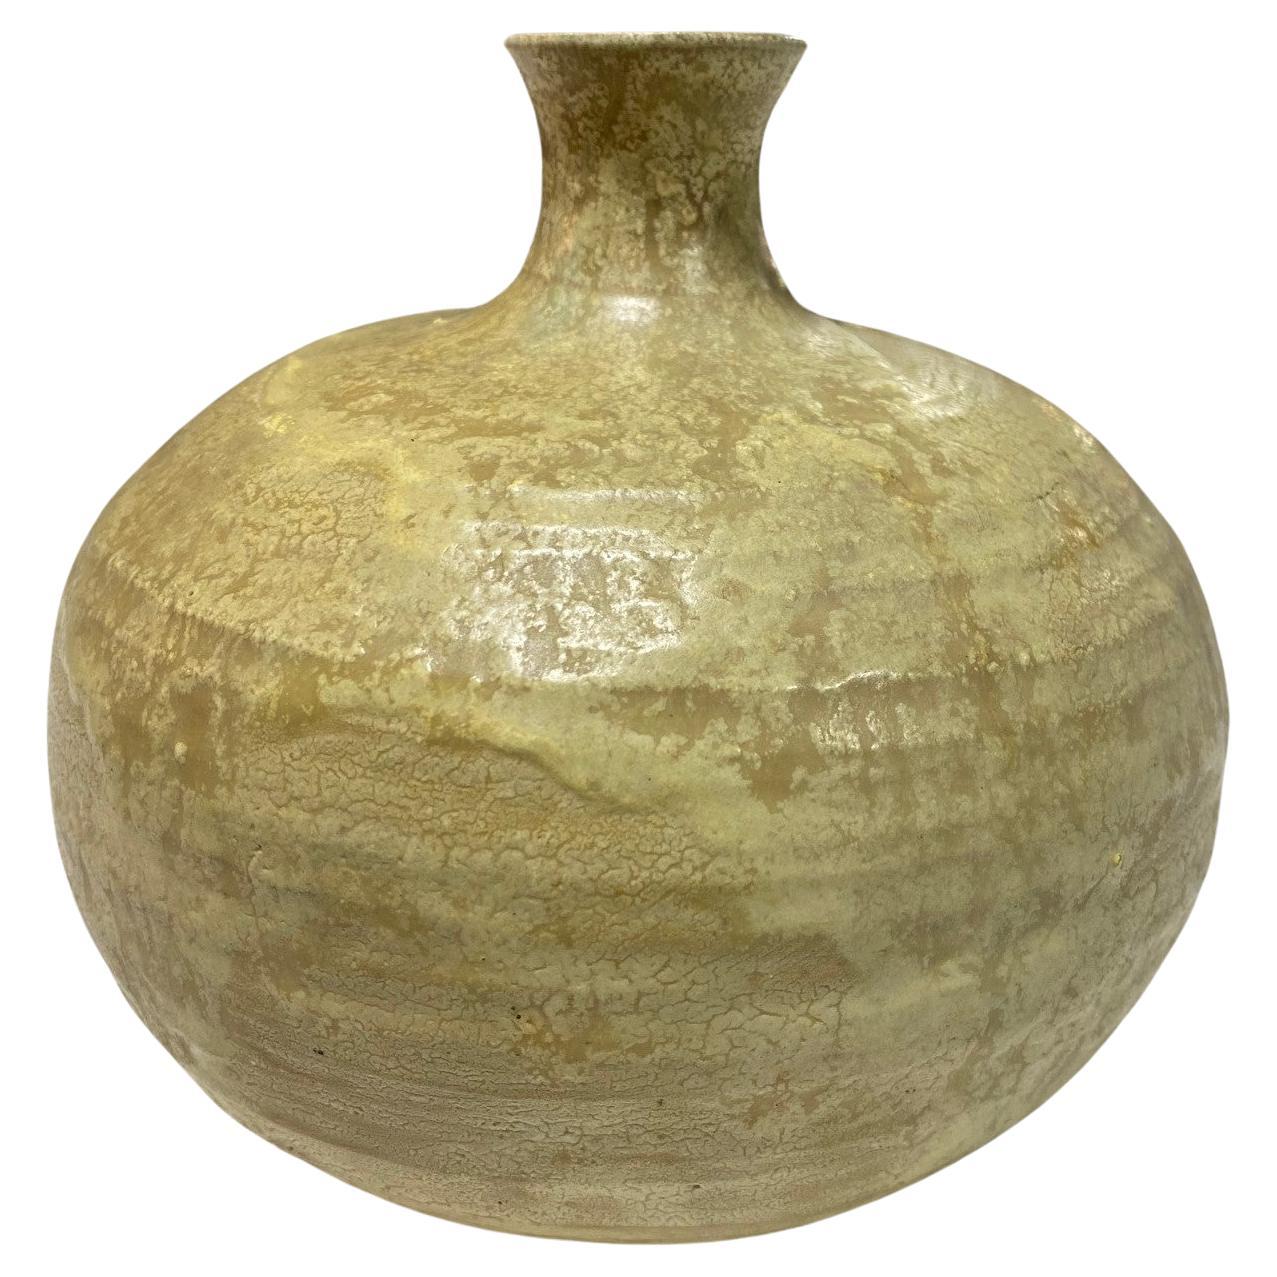 Beatrice Wood Signed Volcanic Lava Glaze Mid-Century Modern Studio Vase Vessel For Sale